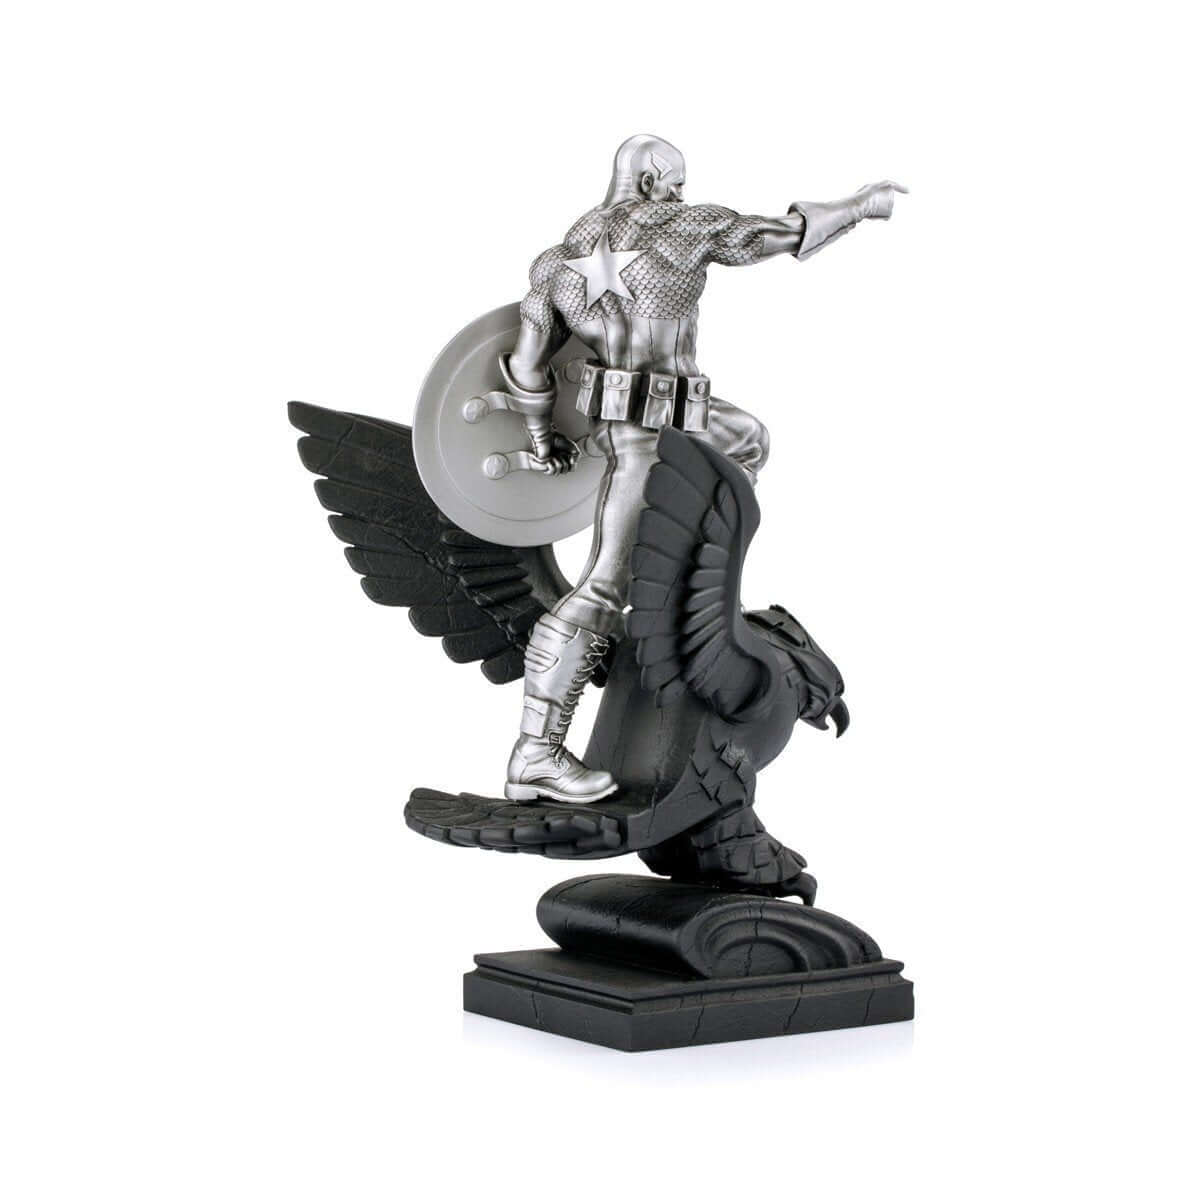 Captain America Resolute Limited Edition Figurine - Marvel Statue